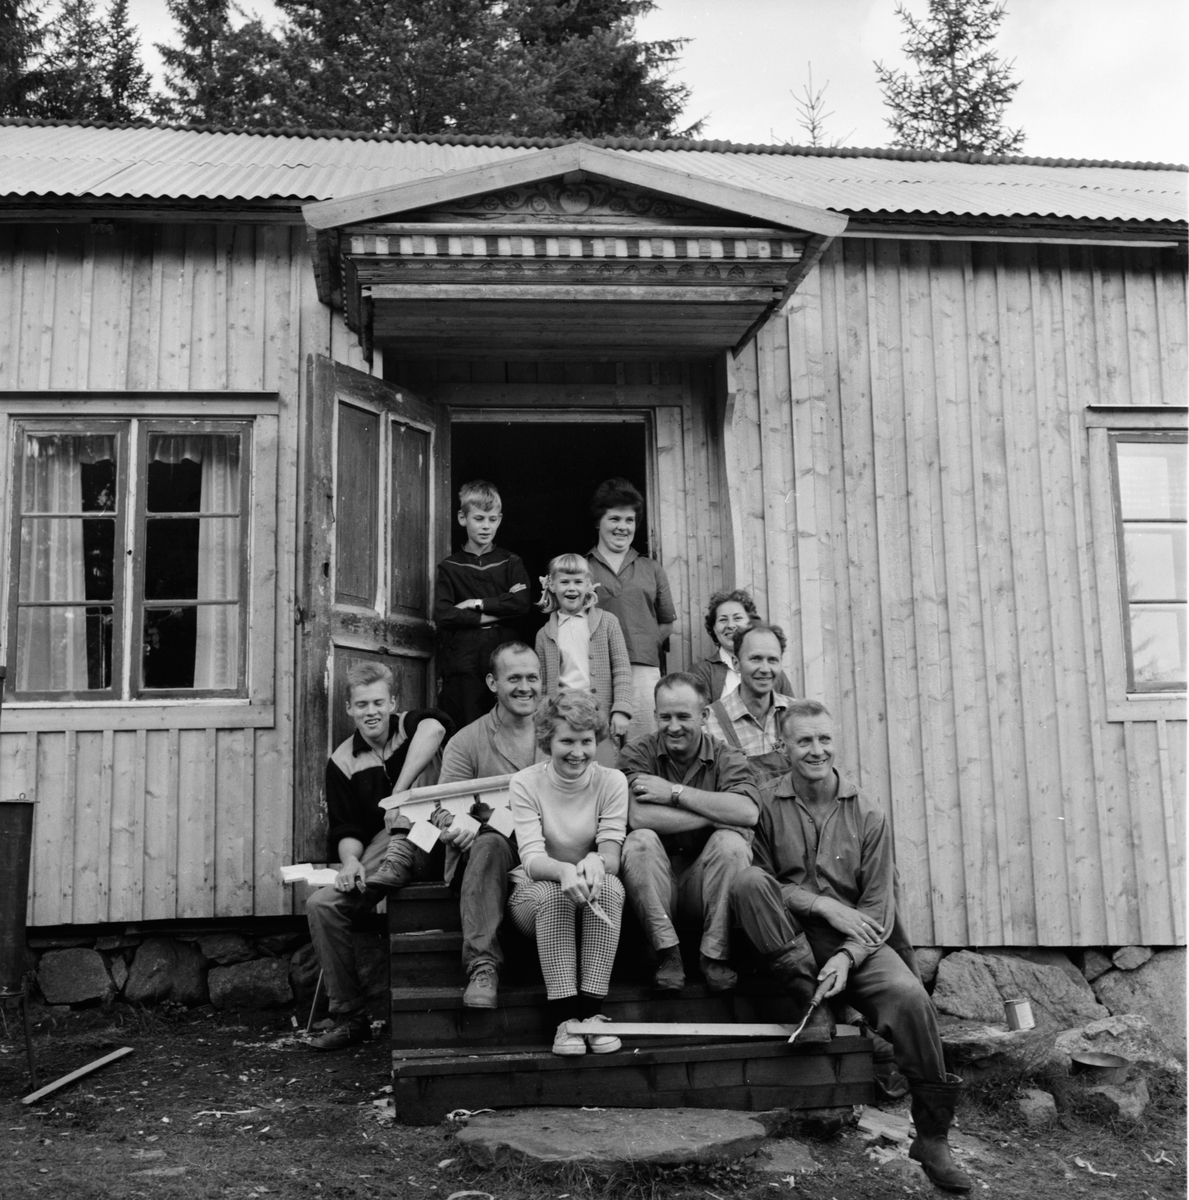 Alfta frisksportares stuga i Malviksbo.
9/9-1962